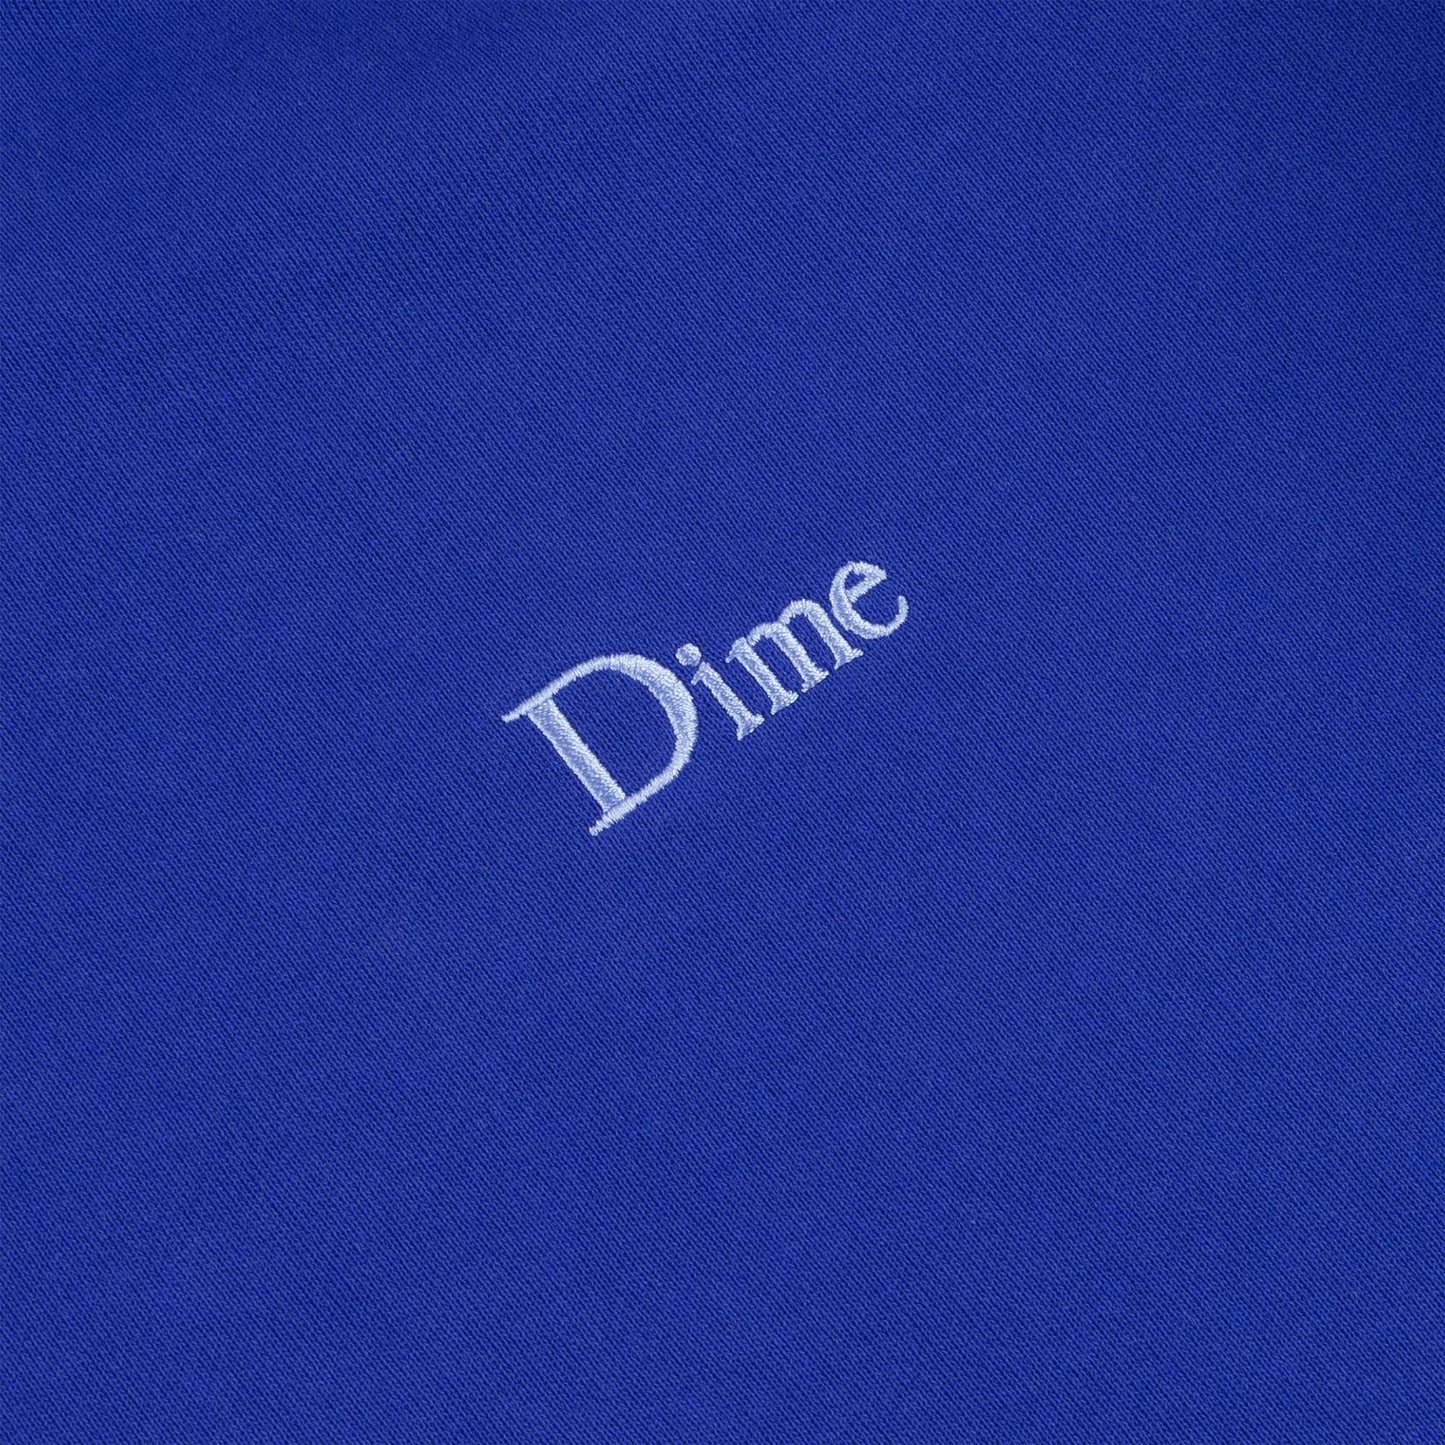 Dime Classic Small Logo Crewneck, ultramarine - Tiki Room Skateboards - 2